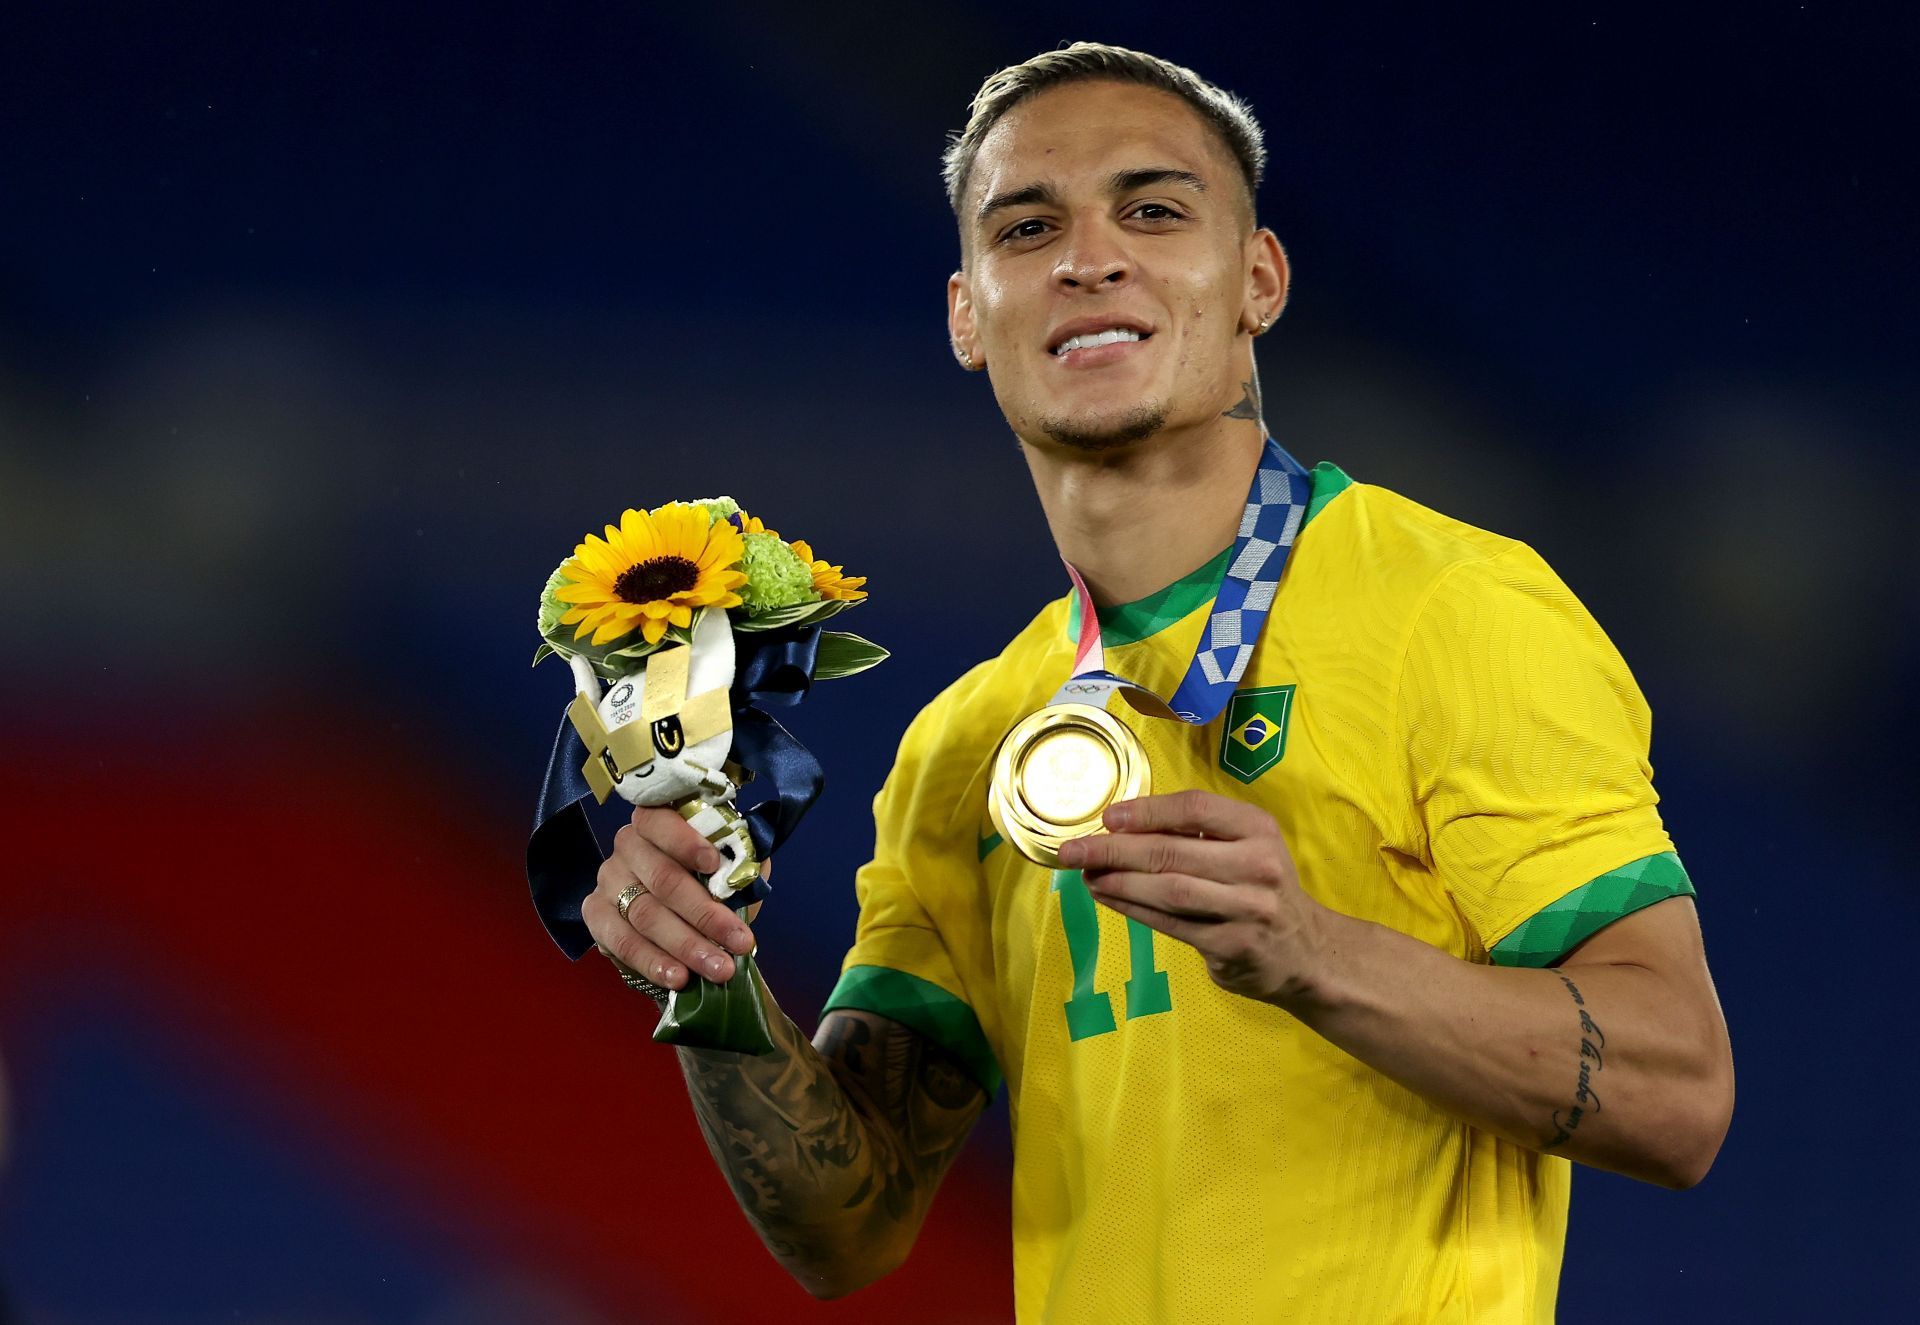 Antony won gold at the Tokyo Olympics with Brazil